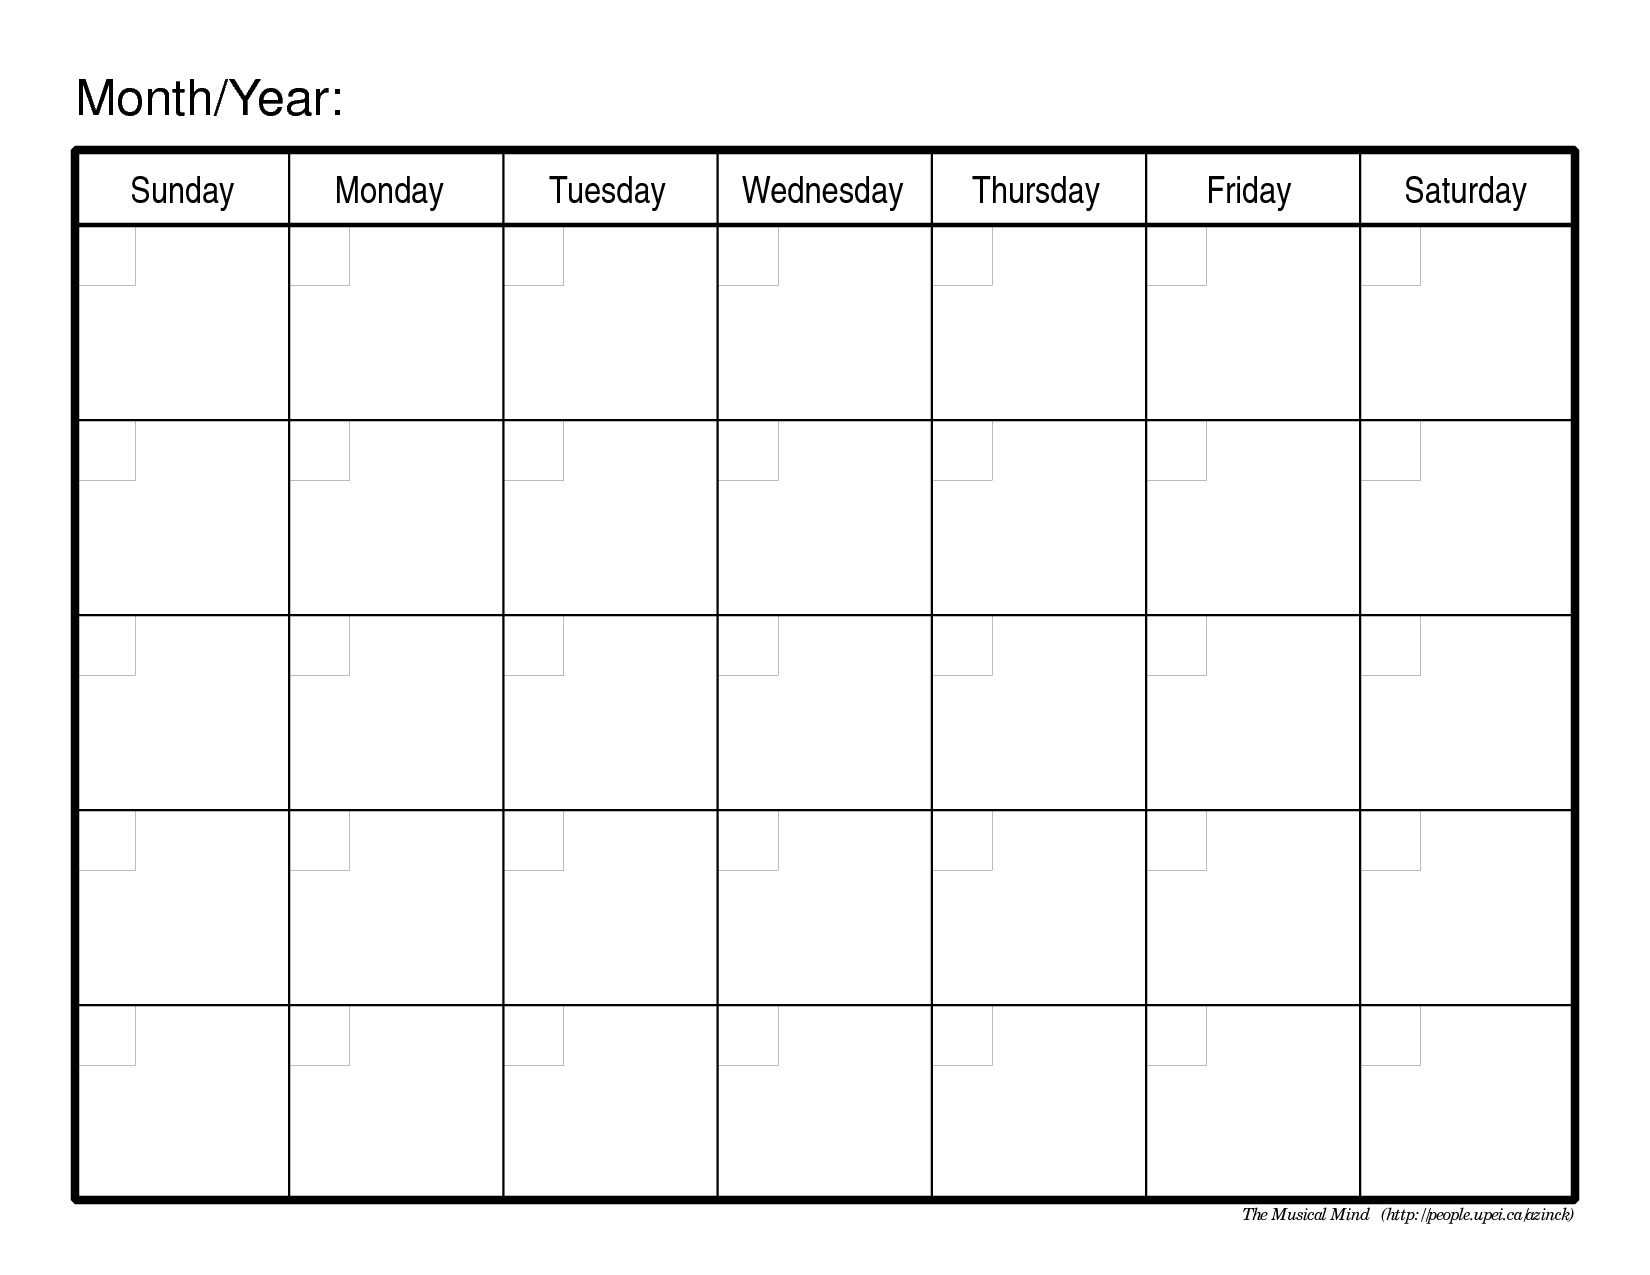 Monthly Calendar Template | Weekly Calendar Template, Blank Free Calendar Layout Templates